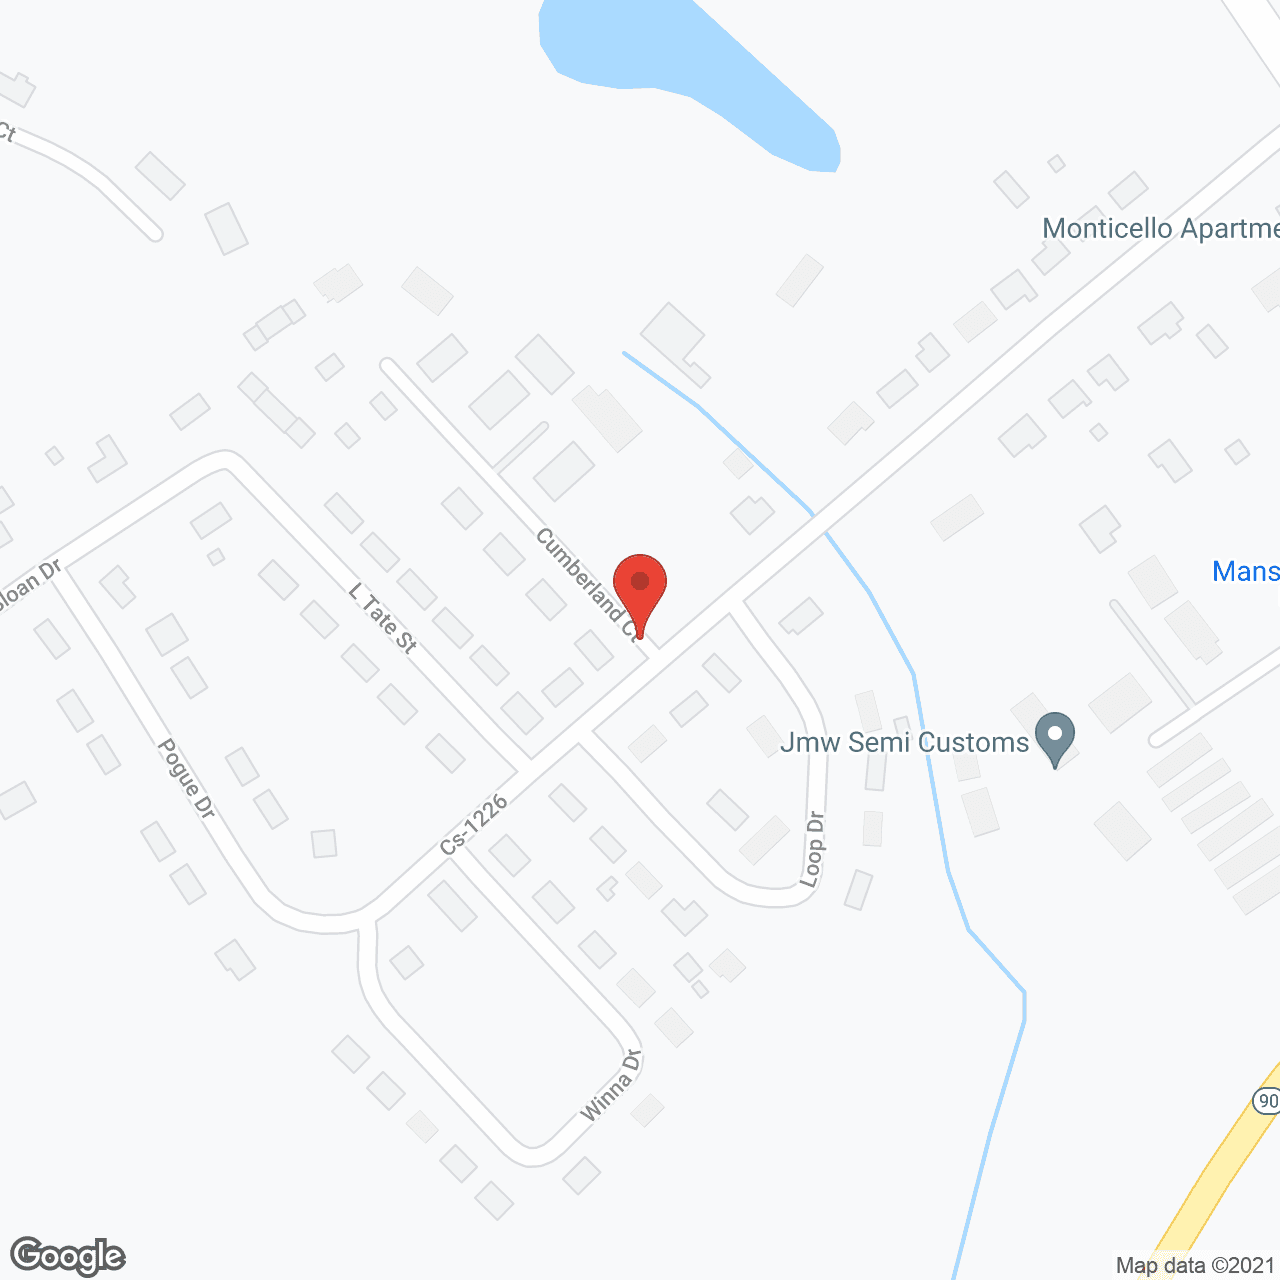 Monticello Senior in google map